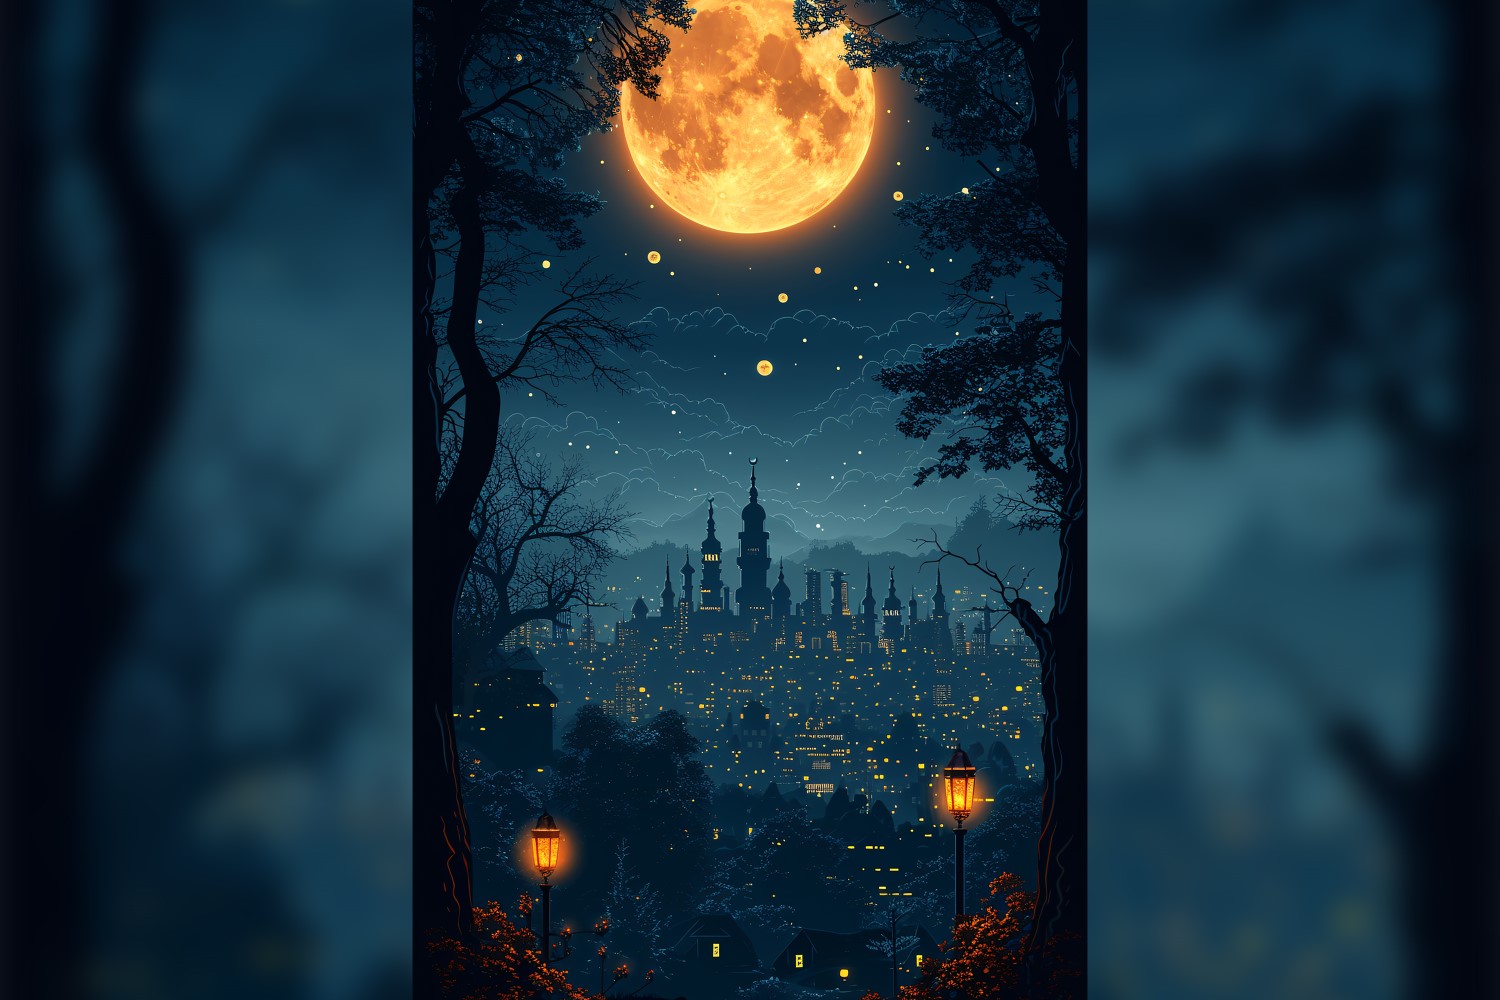 Ramadan Kareem greeting card poster design with moon & trees